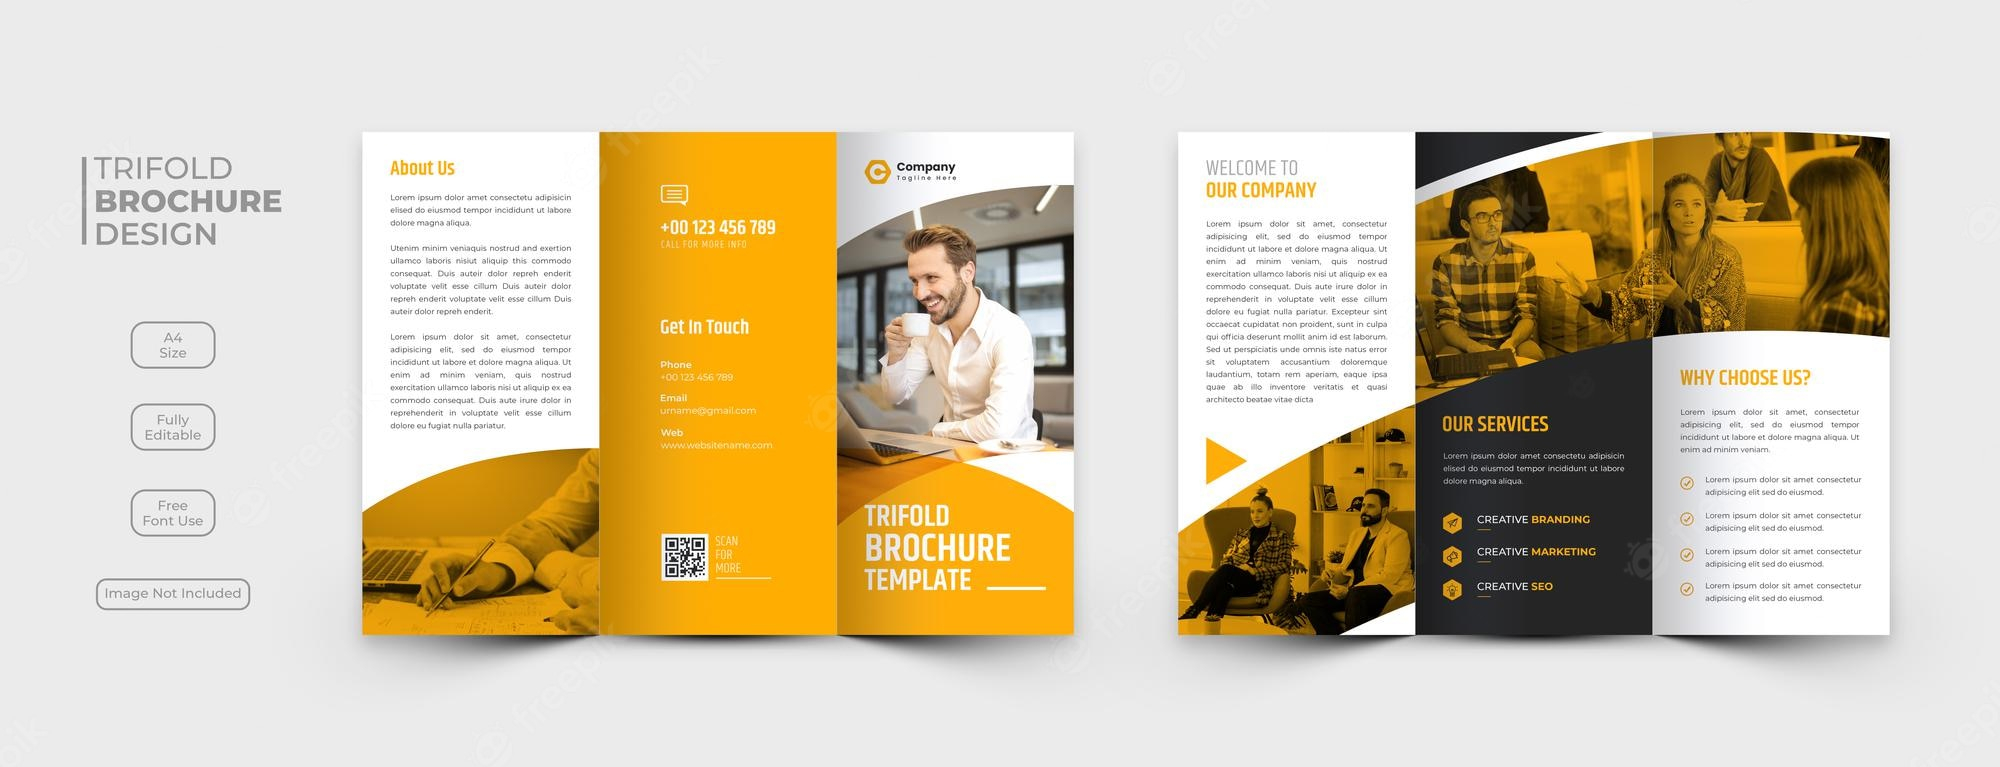 Brochure template - Free Vectors & PSD Download Throughout Online Brochure Template Free